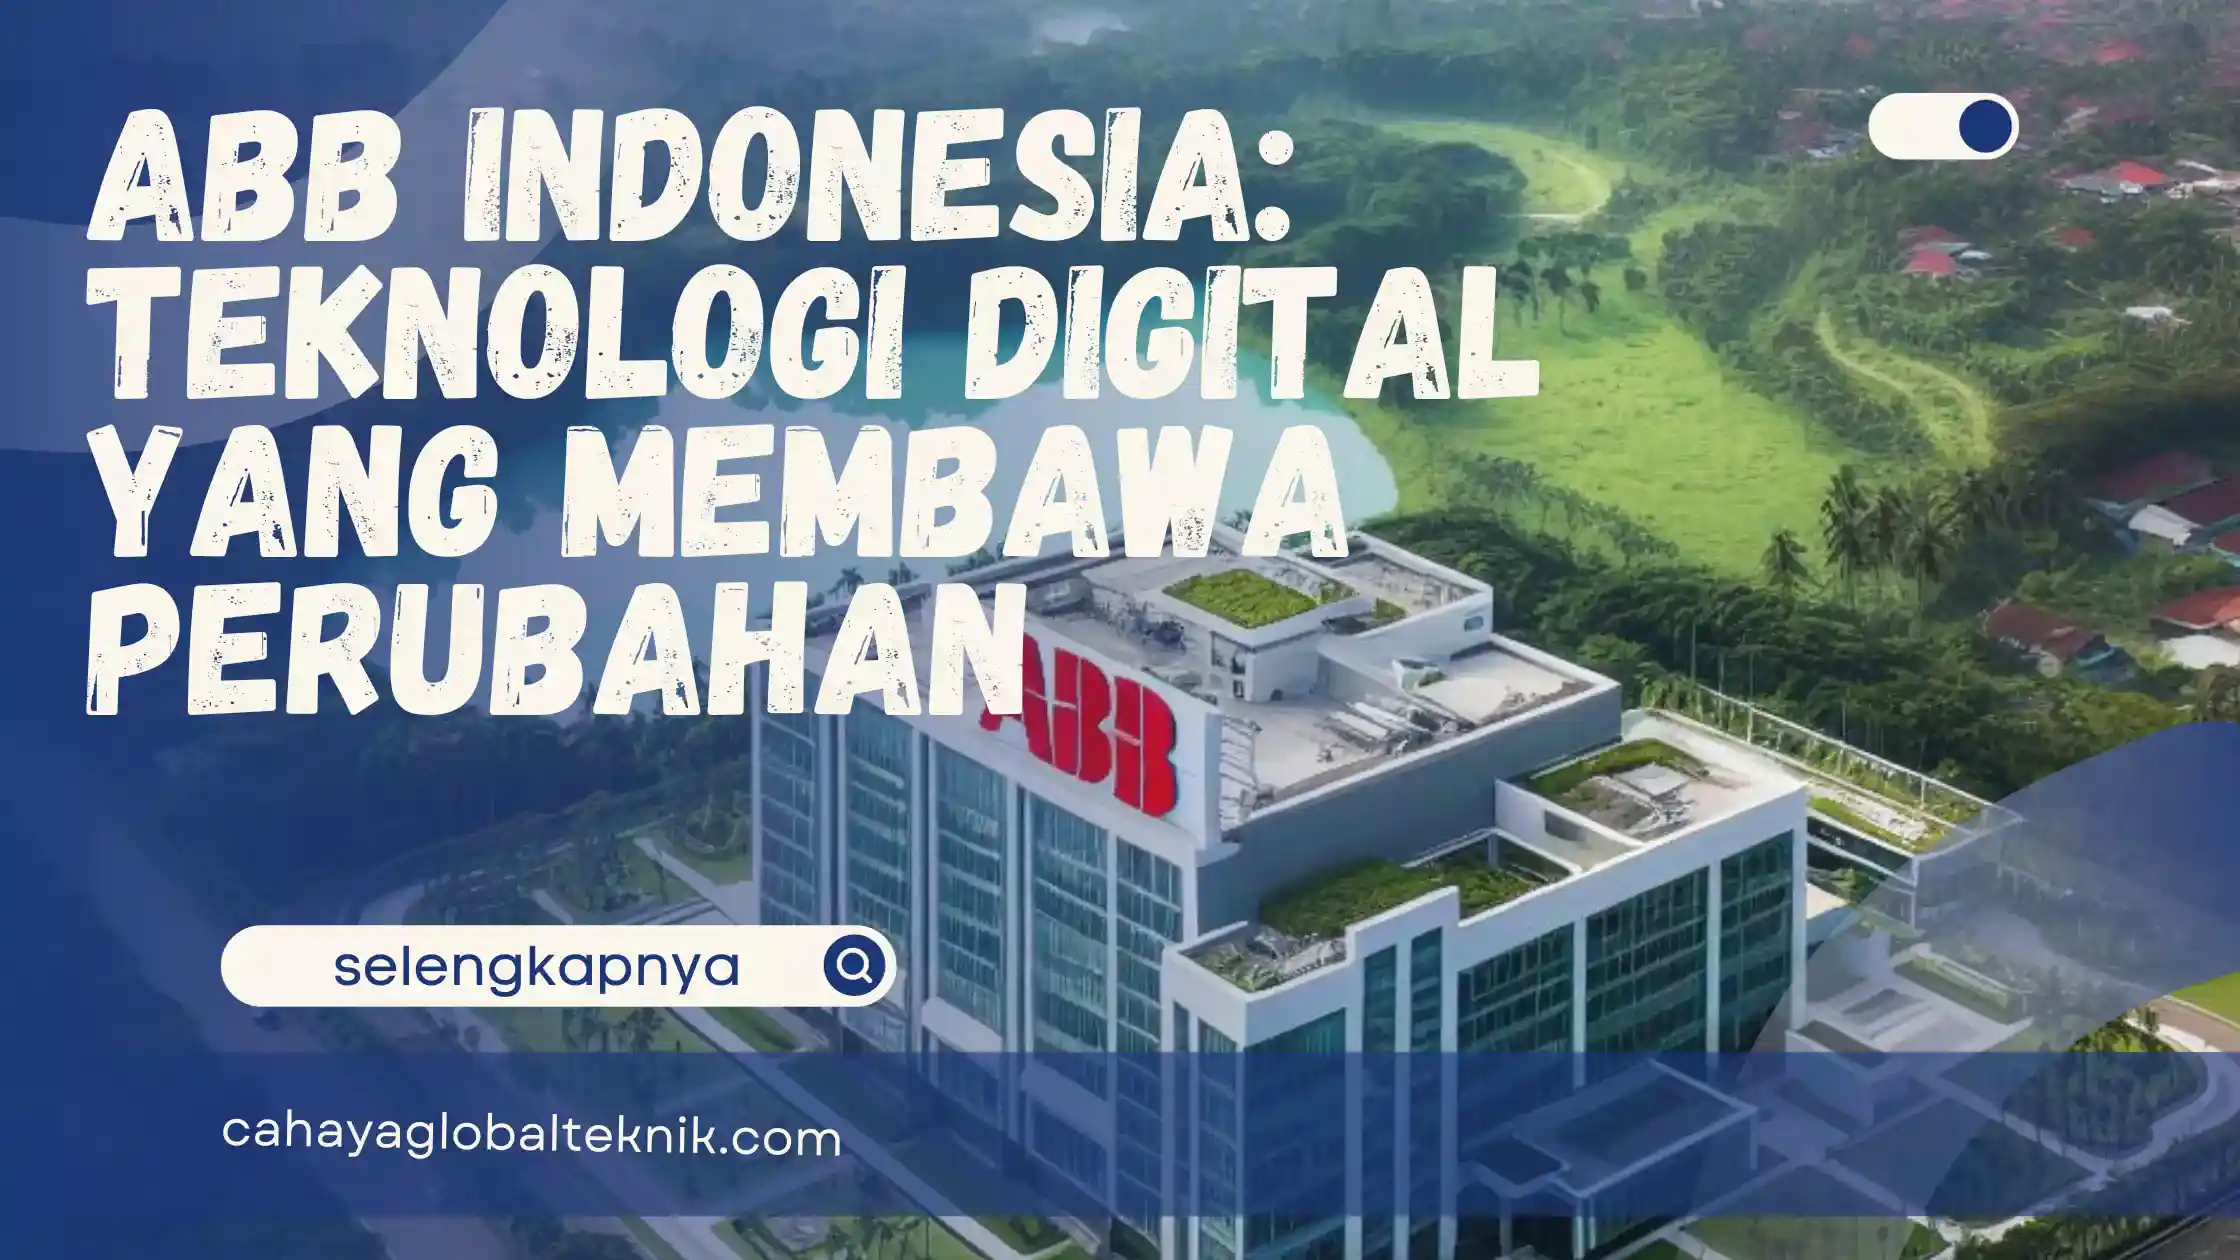 ABB Indonesia Teknologi Digital yang Membawa Perubahan